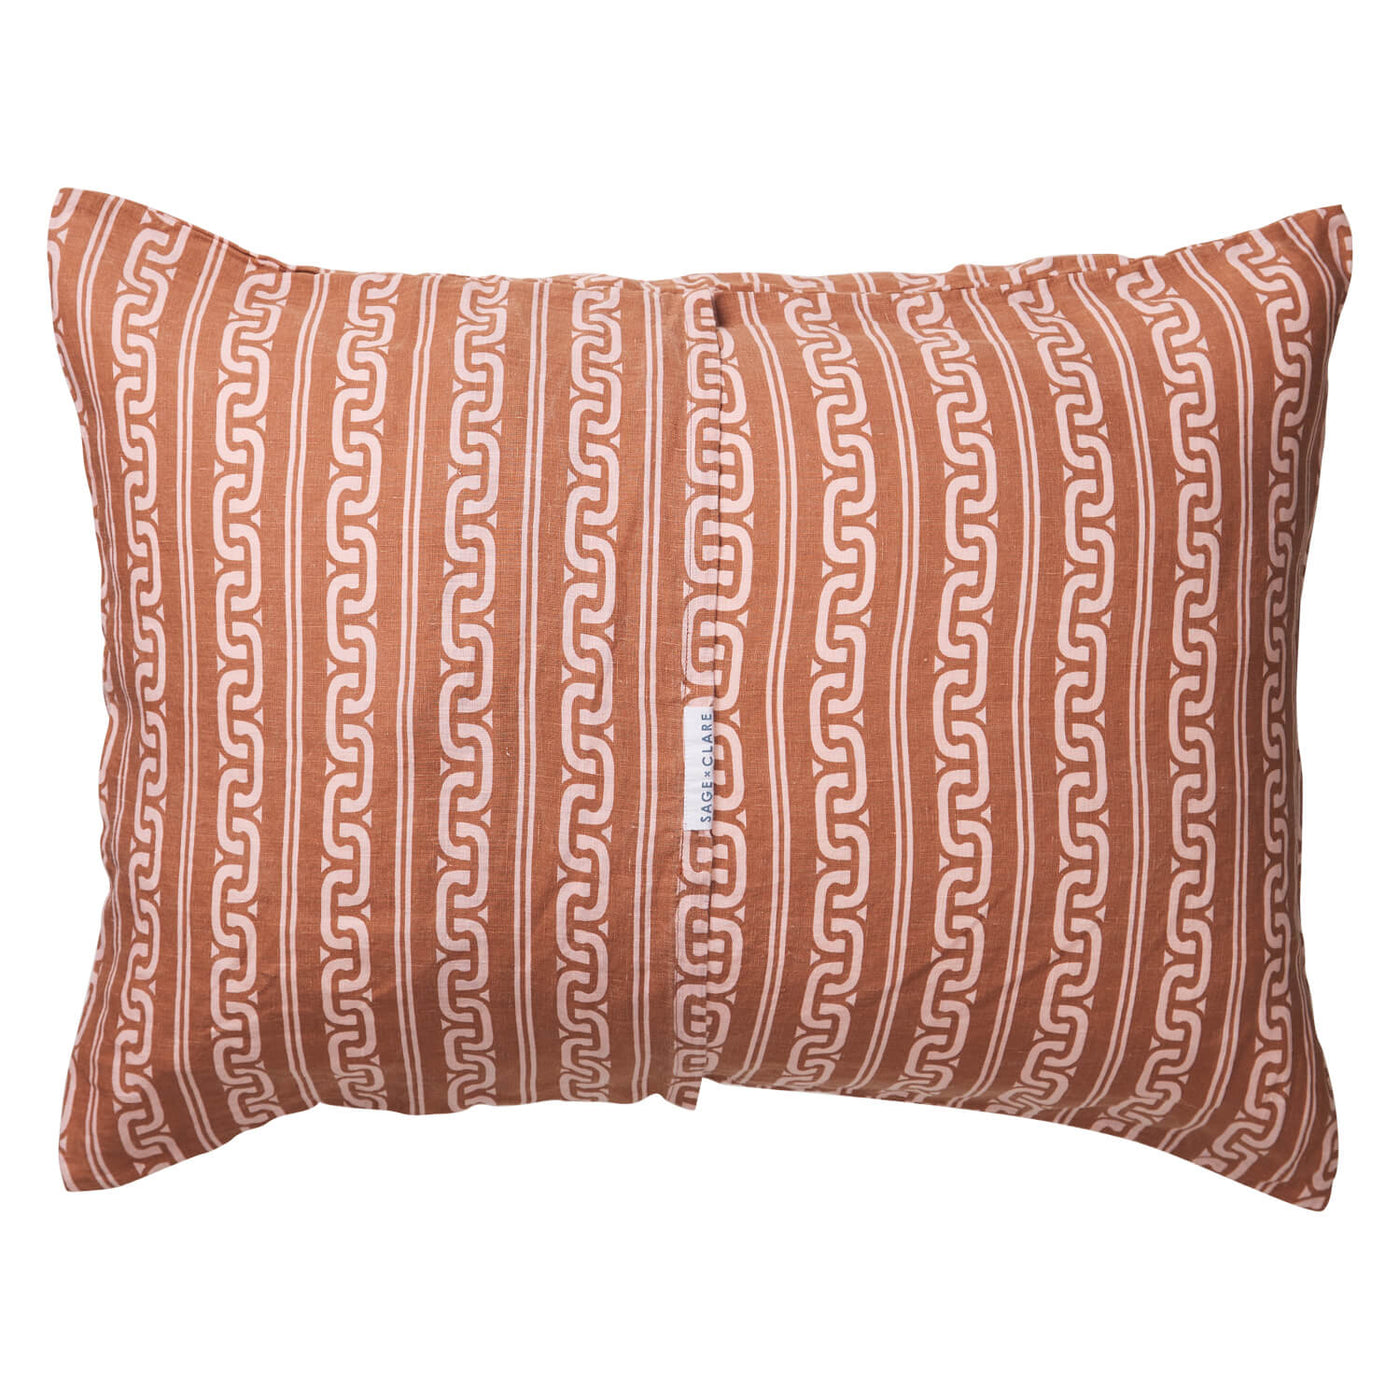 Fidel Linen Pillowcase Set